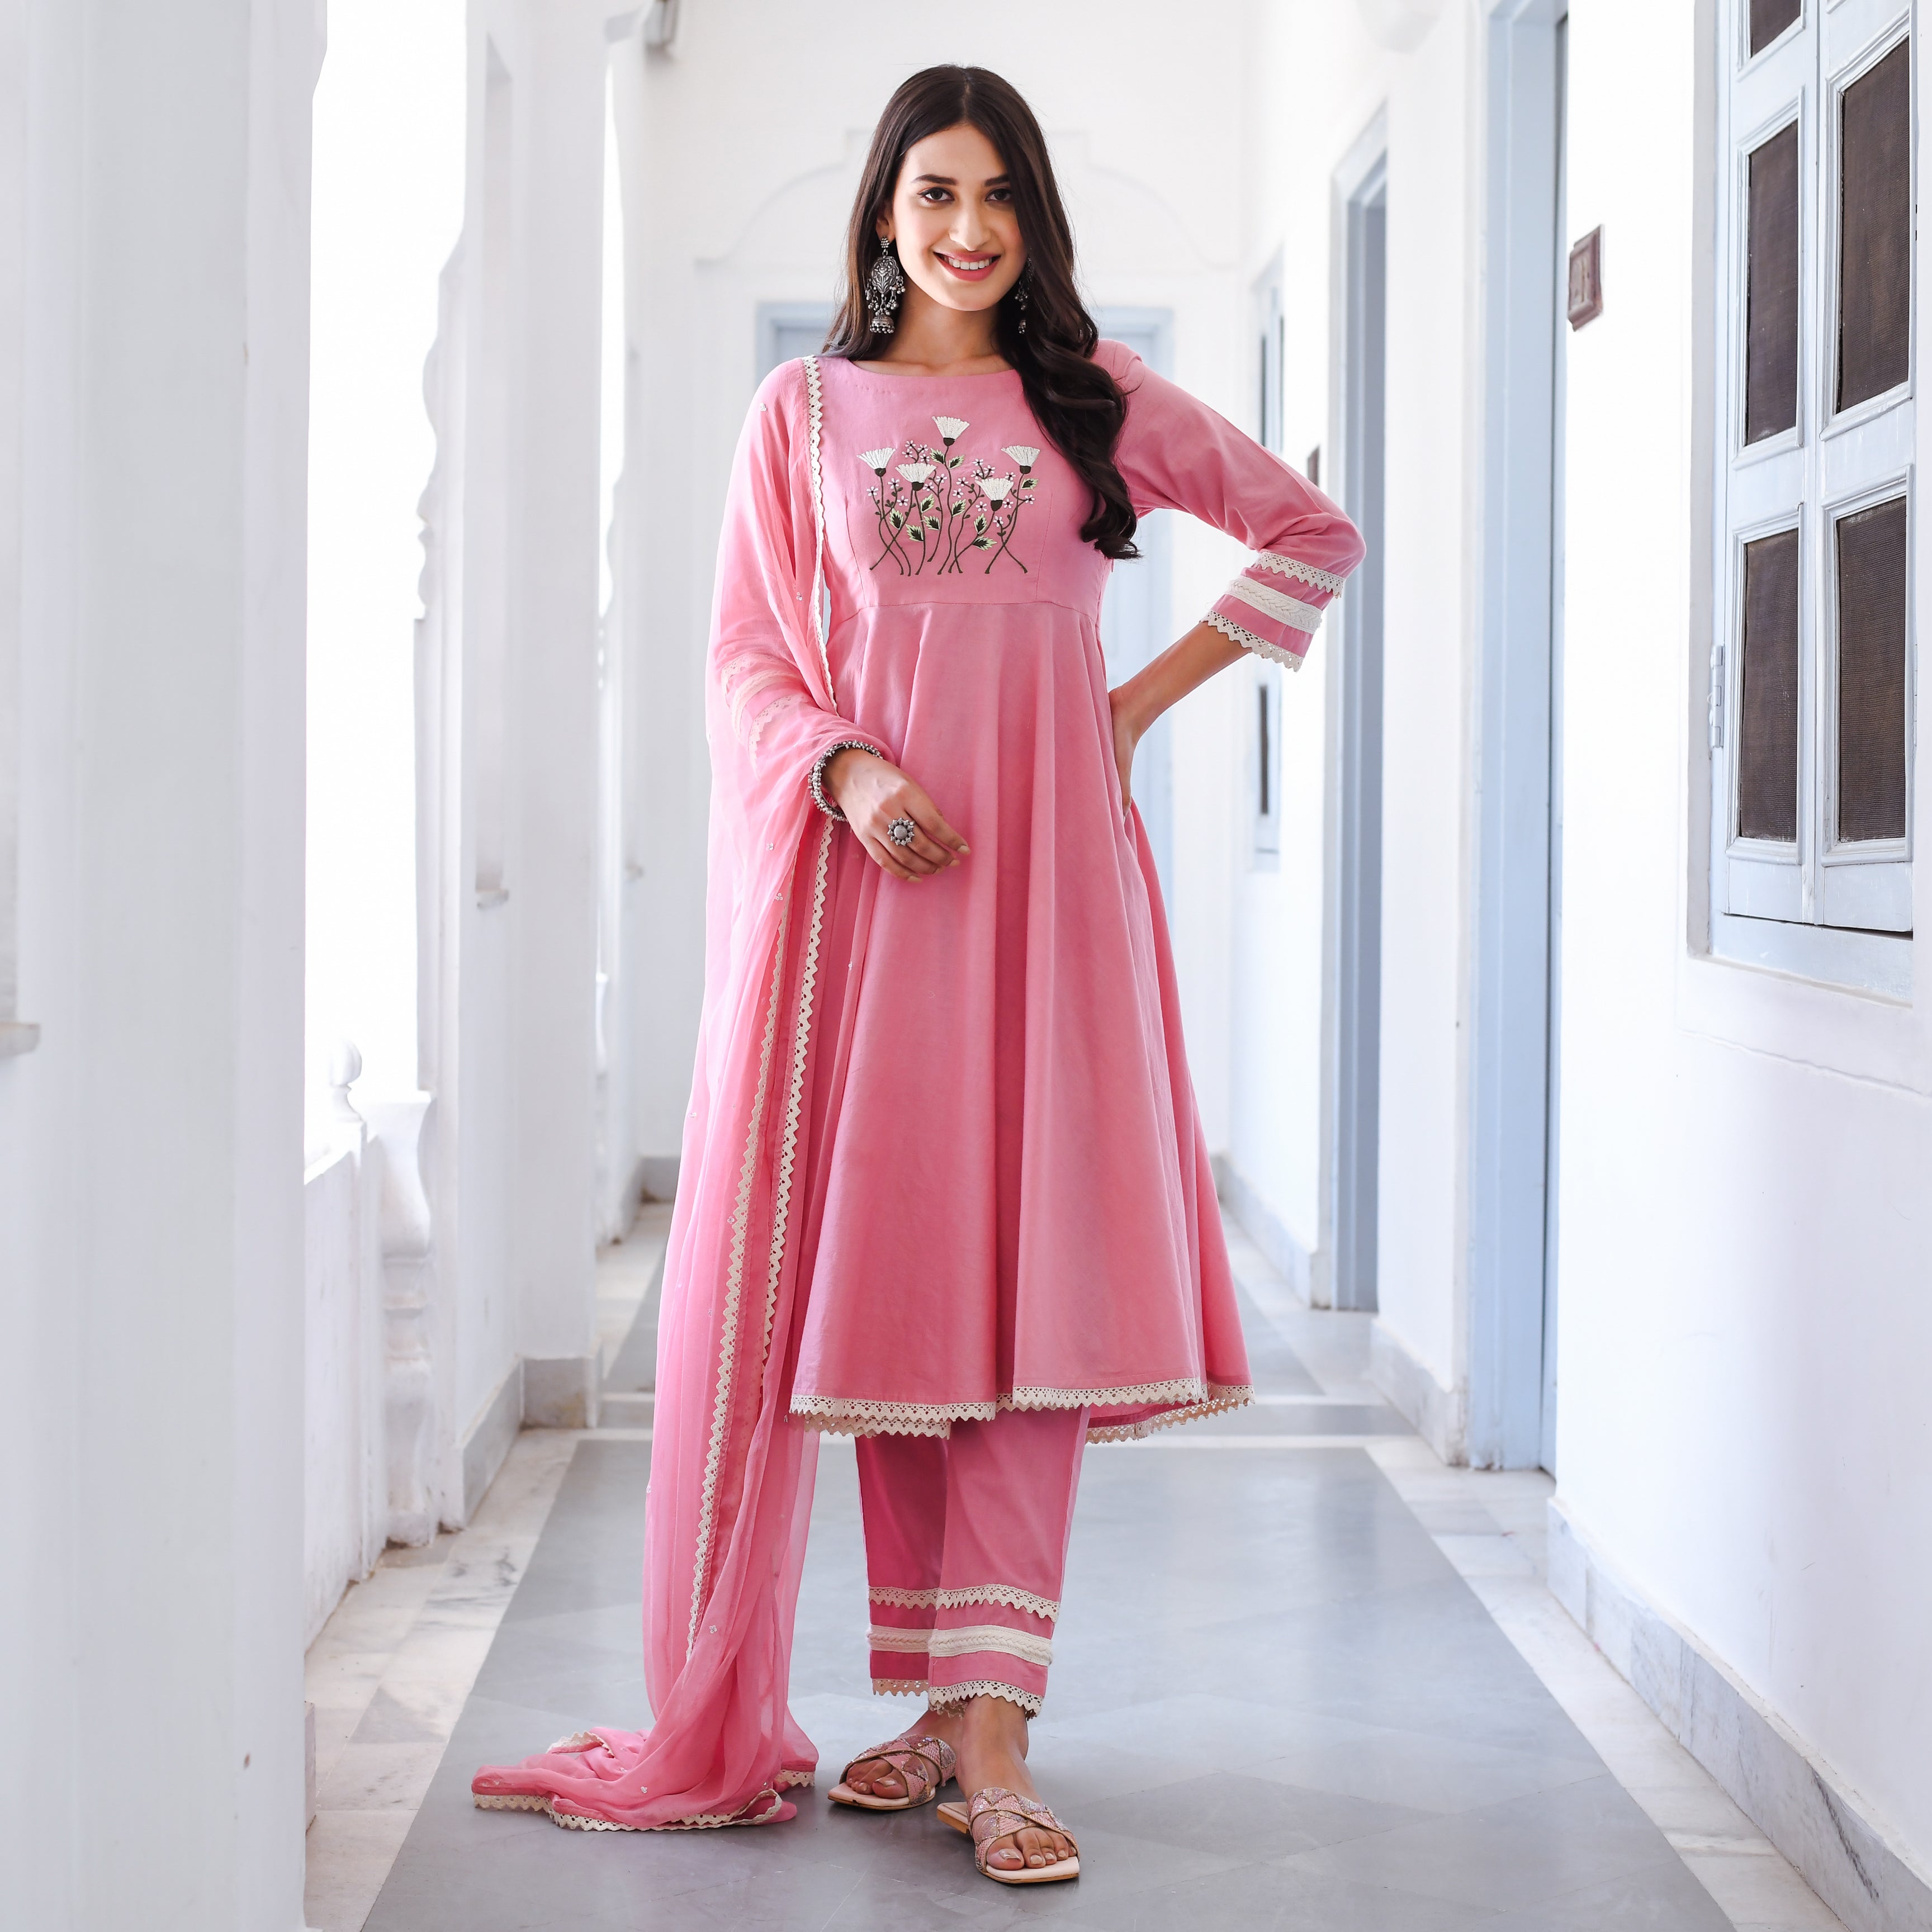 Prapti Pink Designer Ethnic Wear Suit Set For Women Online